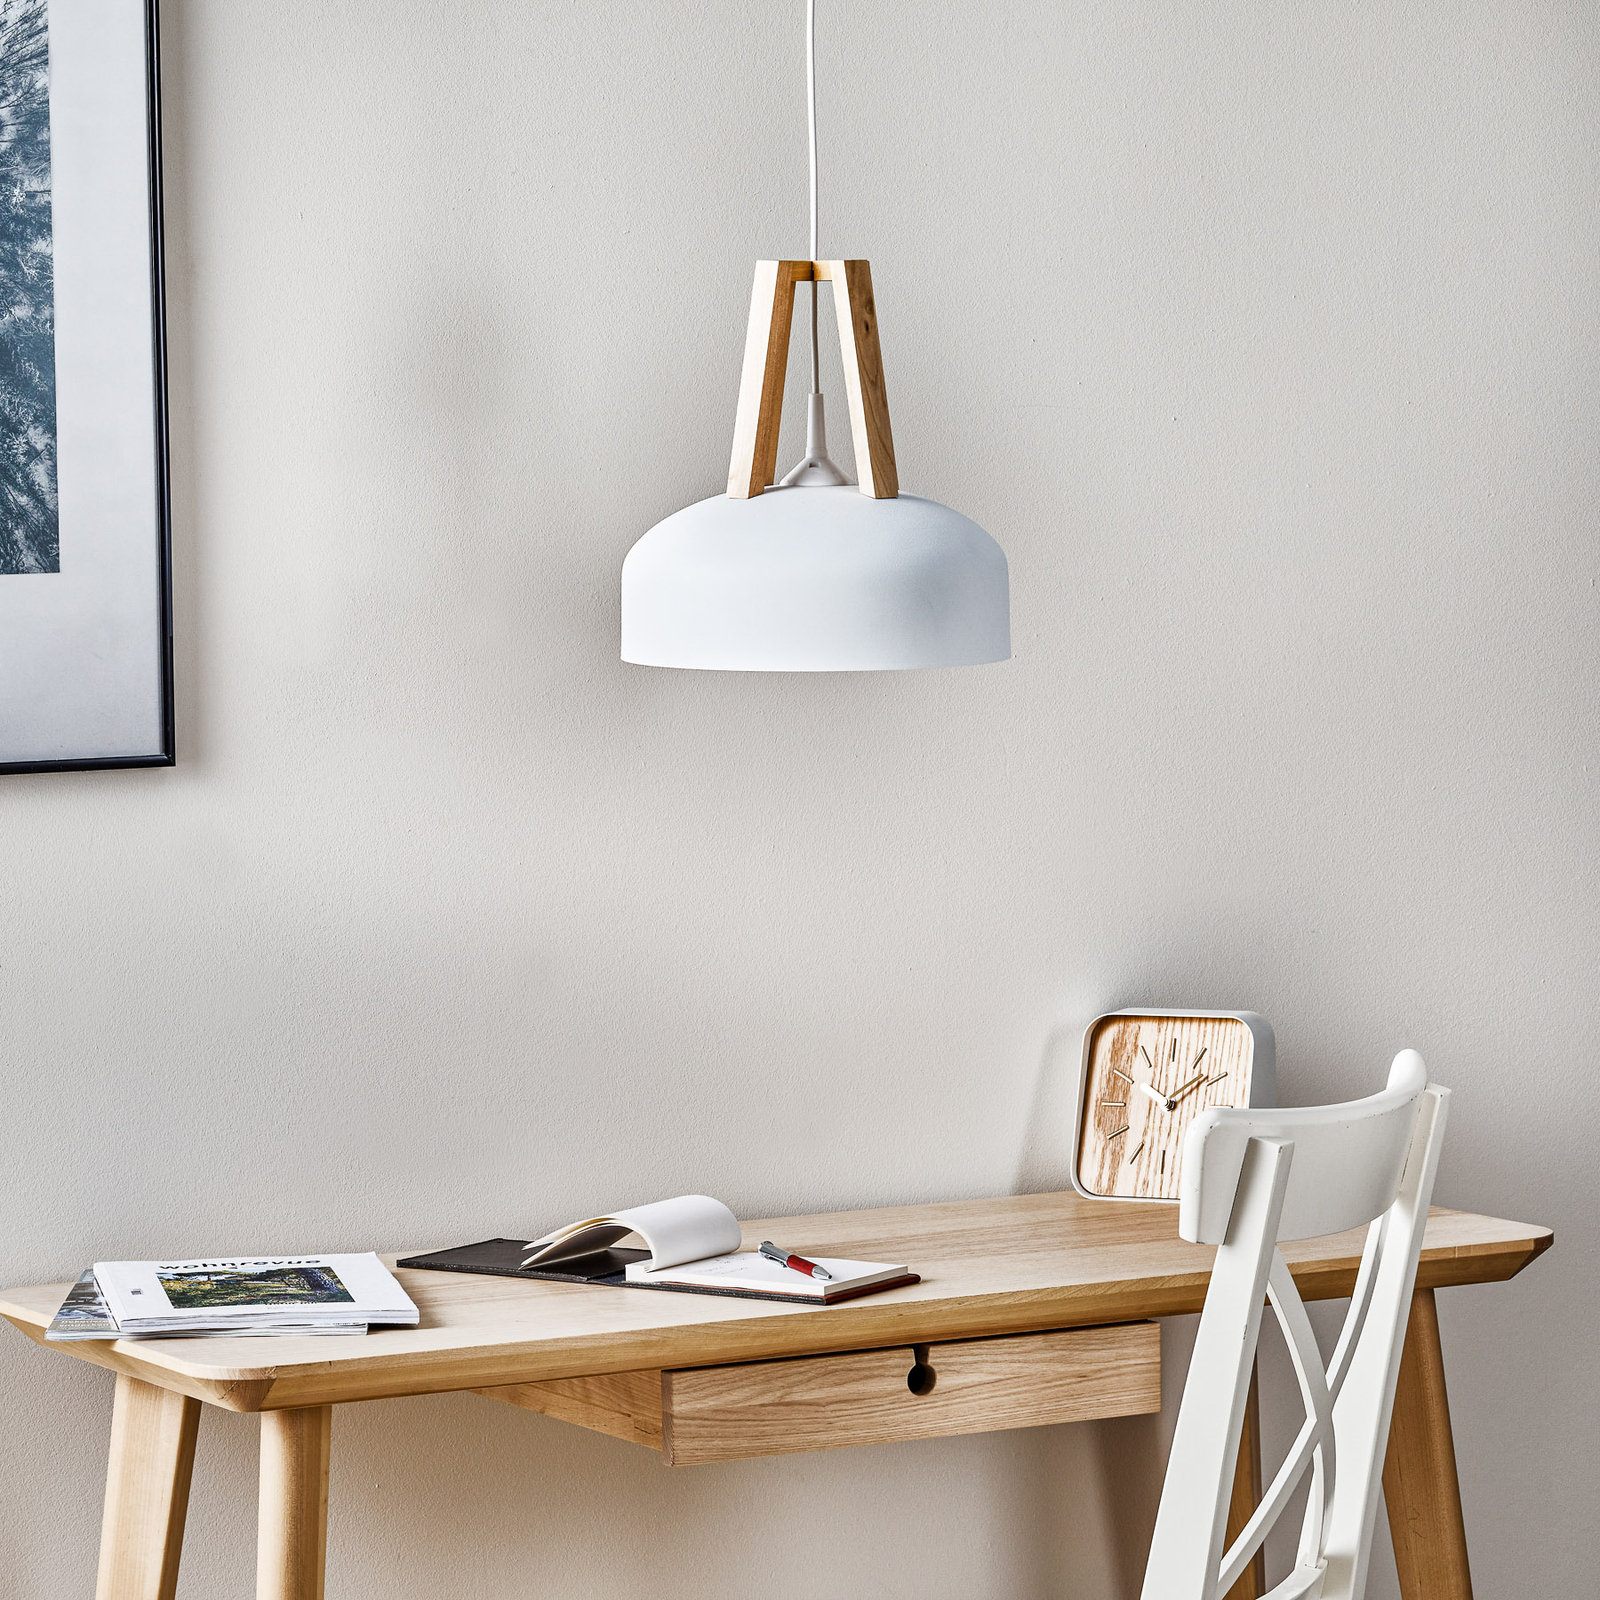 North hanging light, natural wood, white lampshade